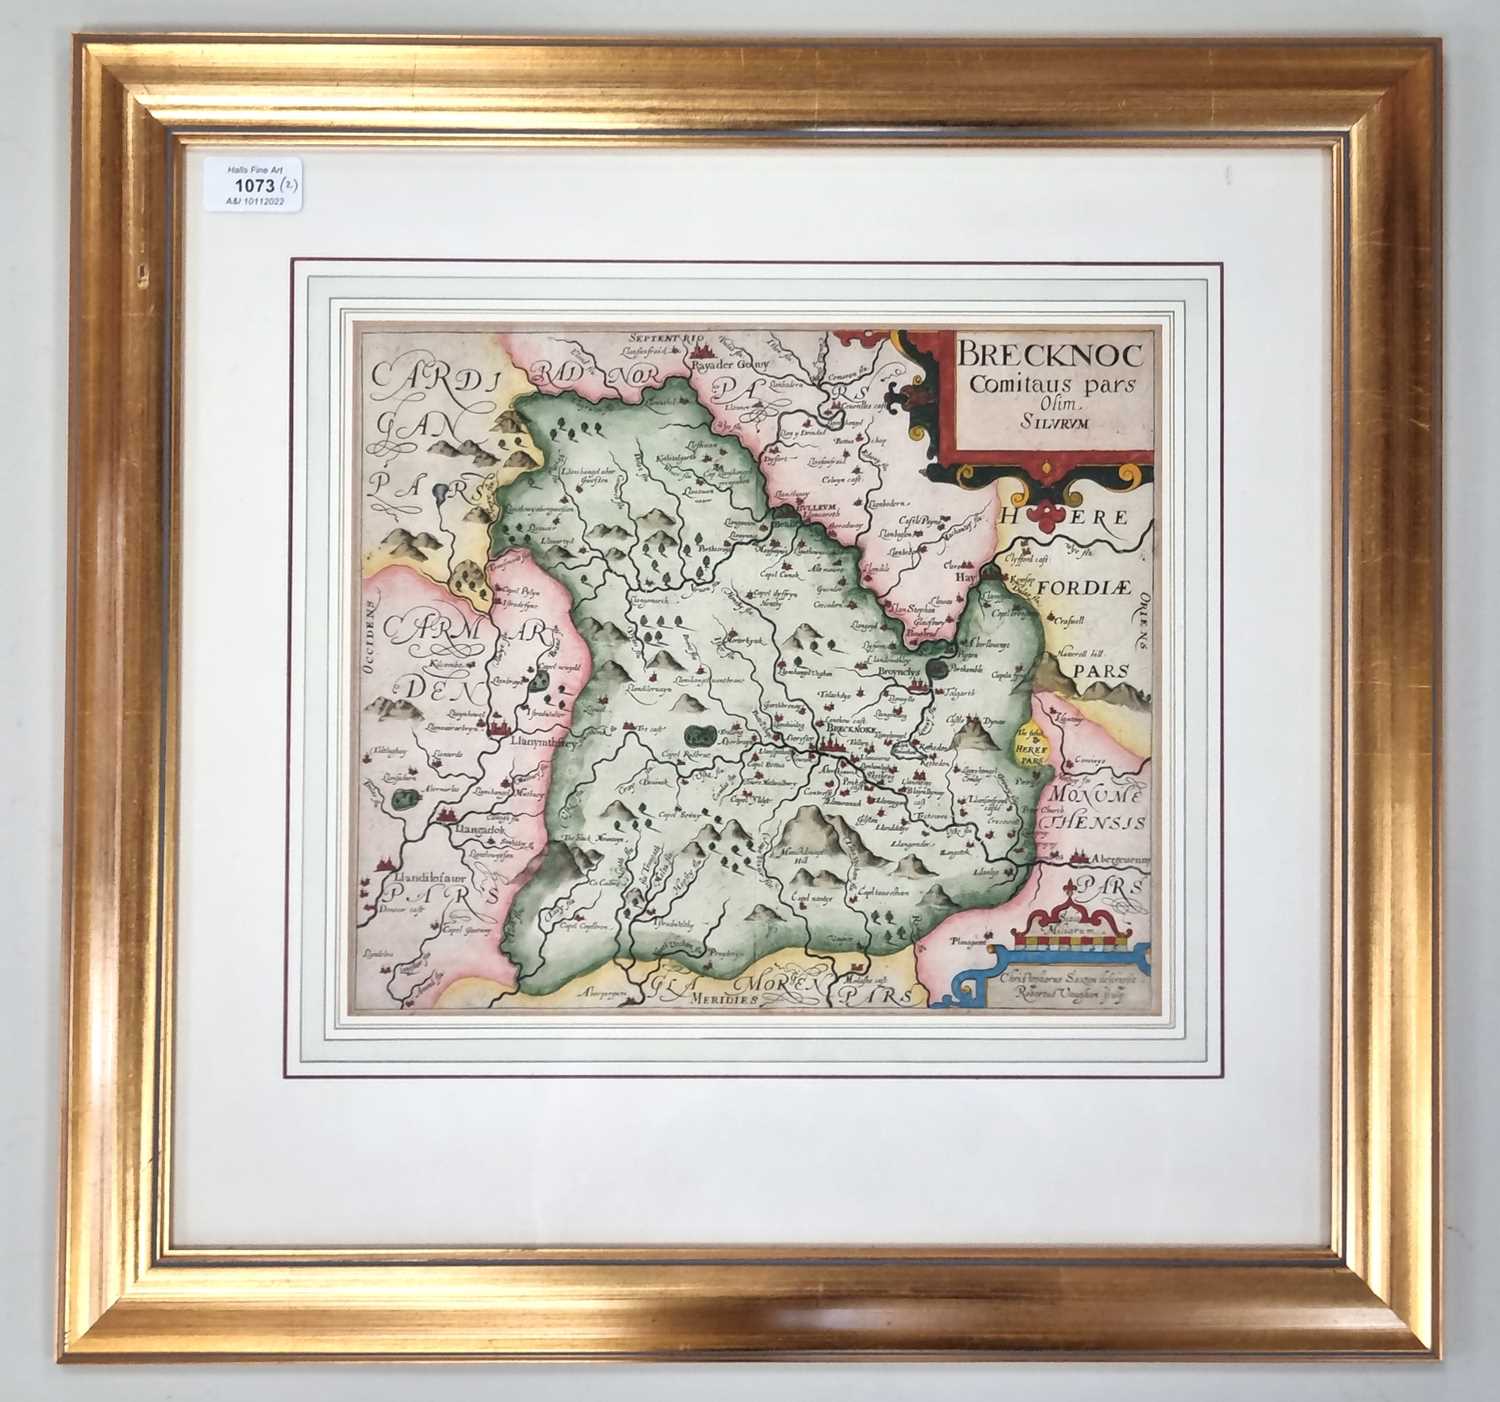 Lot 1073 - SAXTON, Christopher & KIP, William, Map of Denbigh.